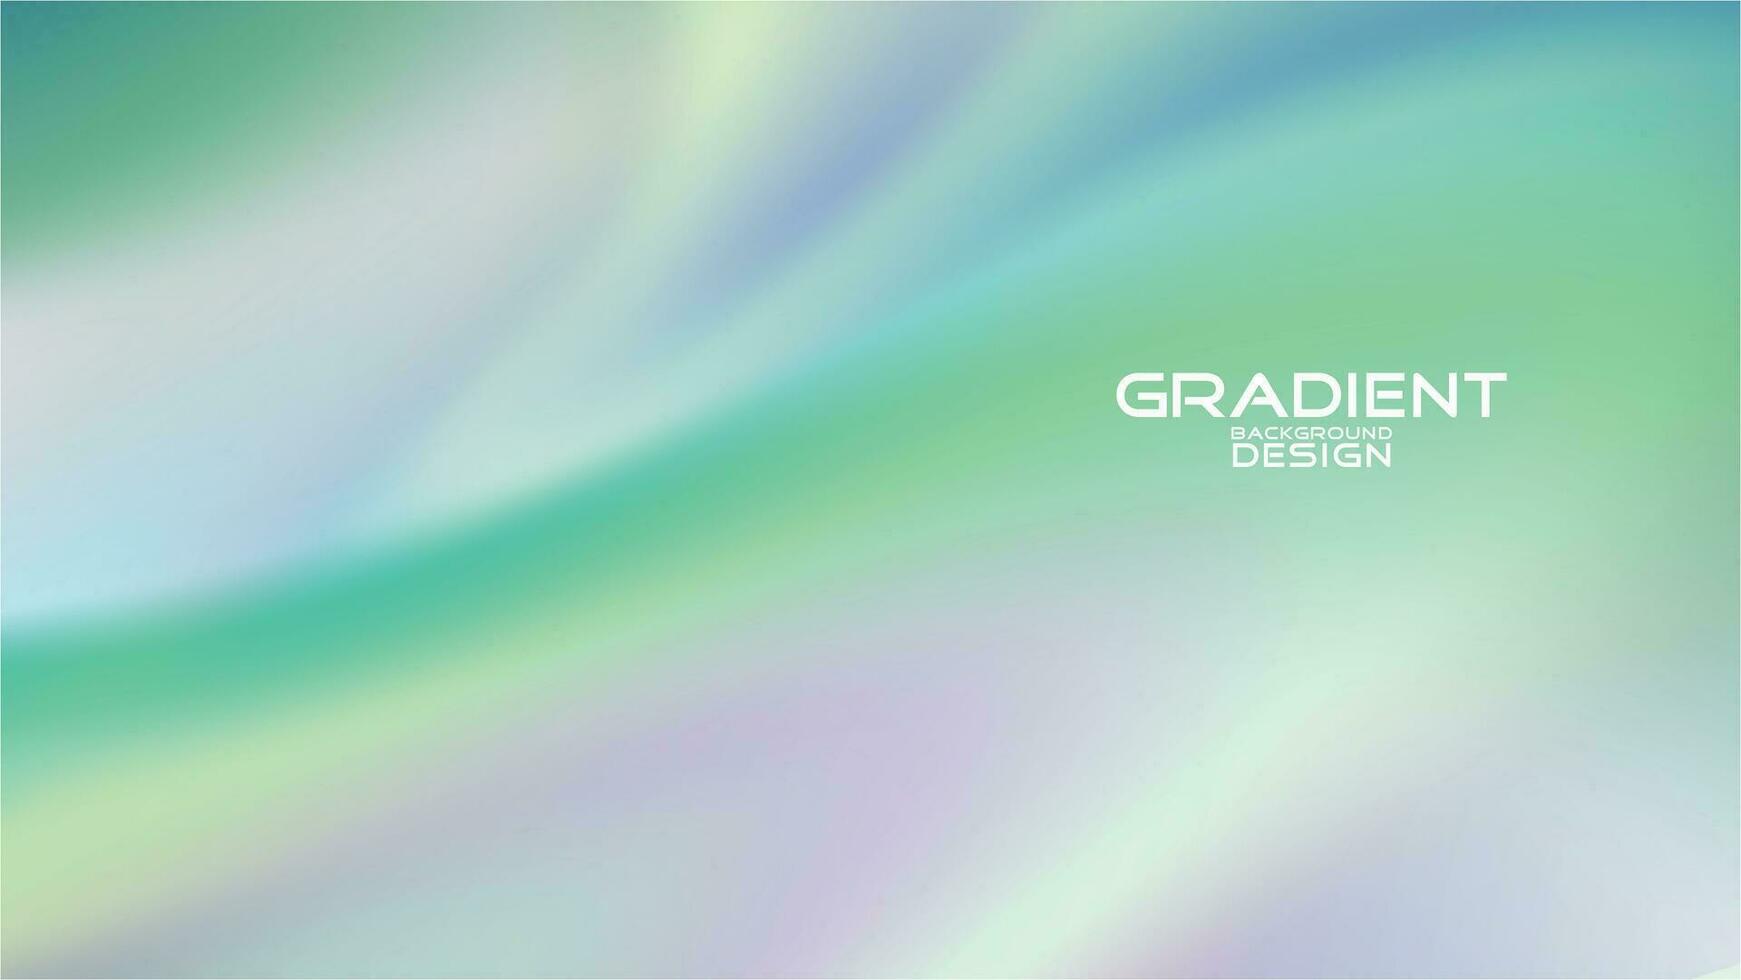 Abstract gradient background design. vector